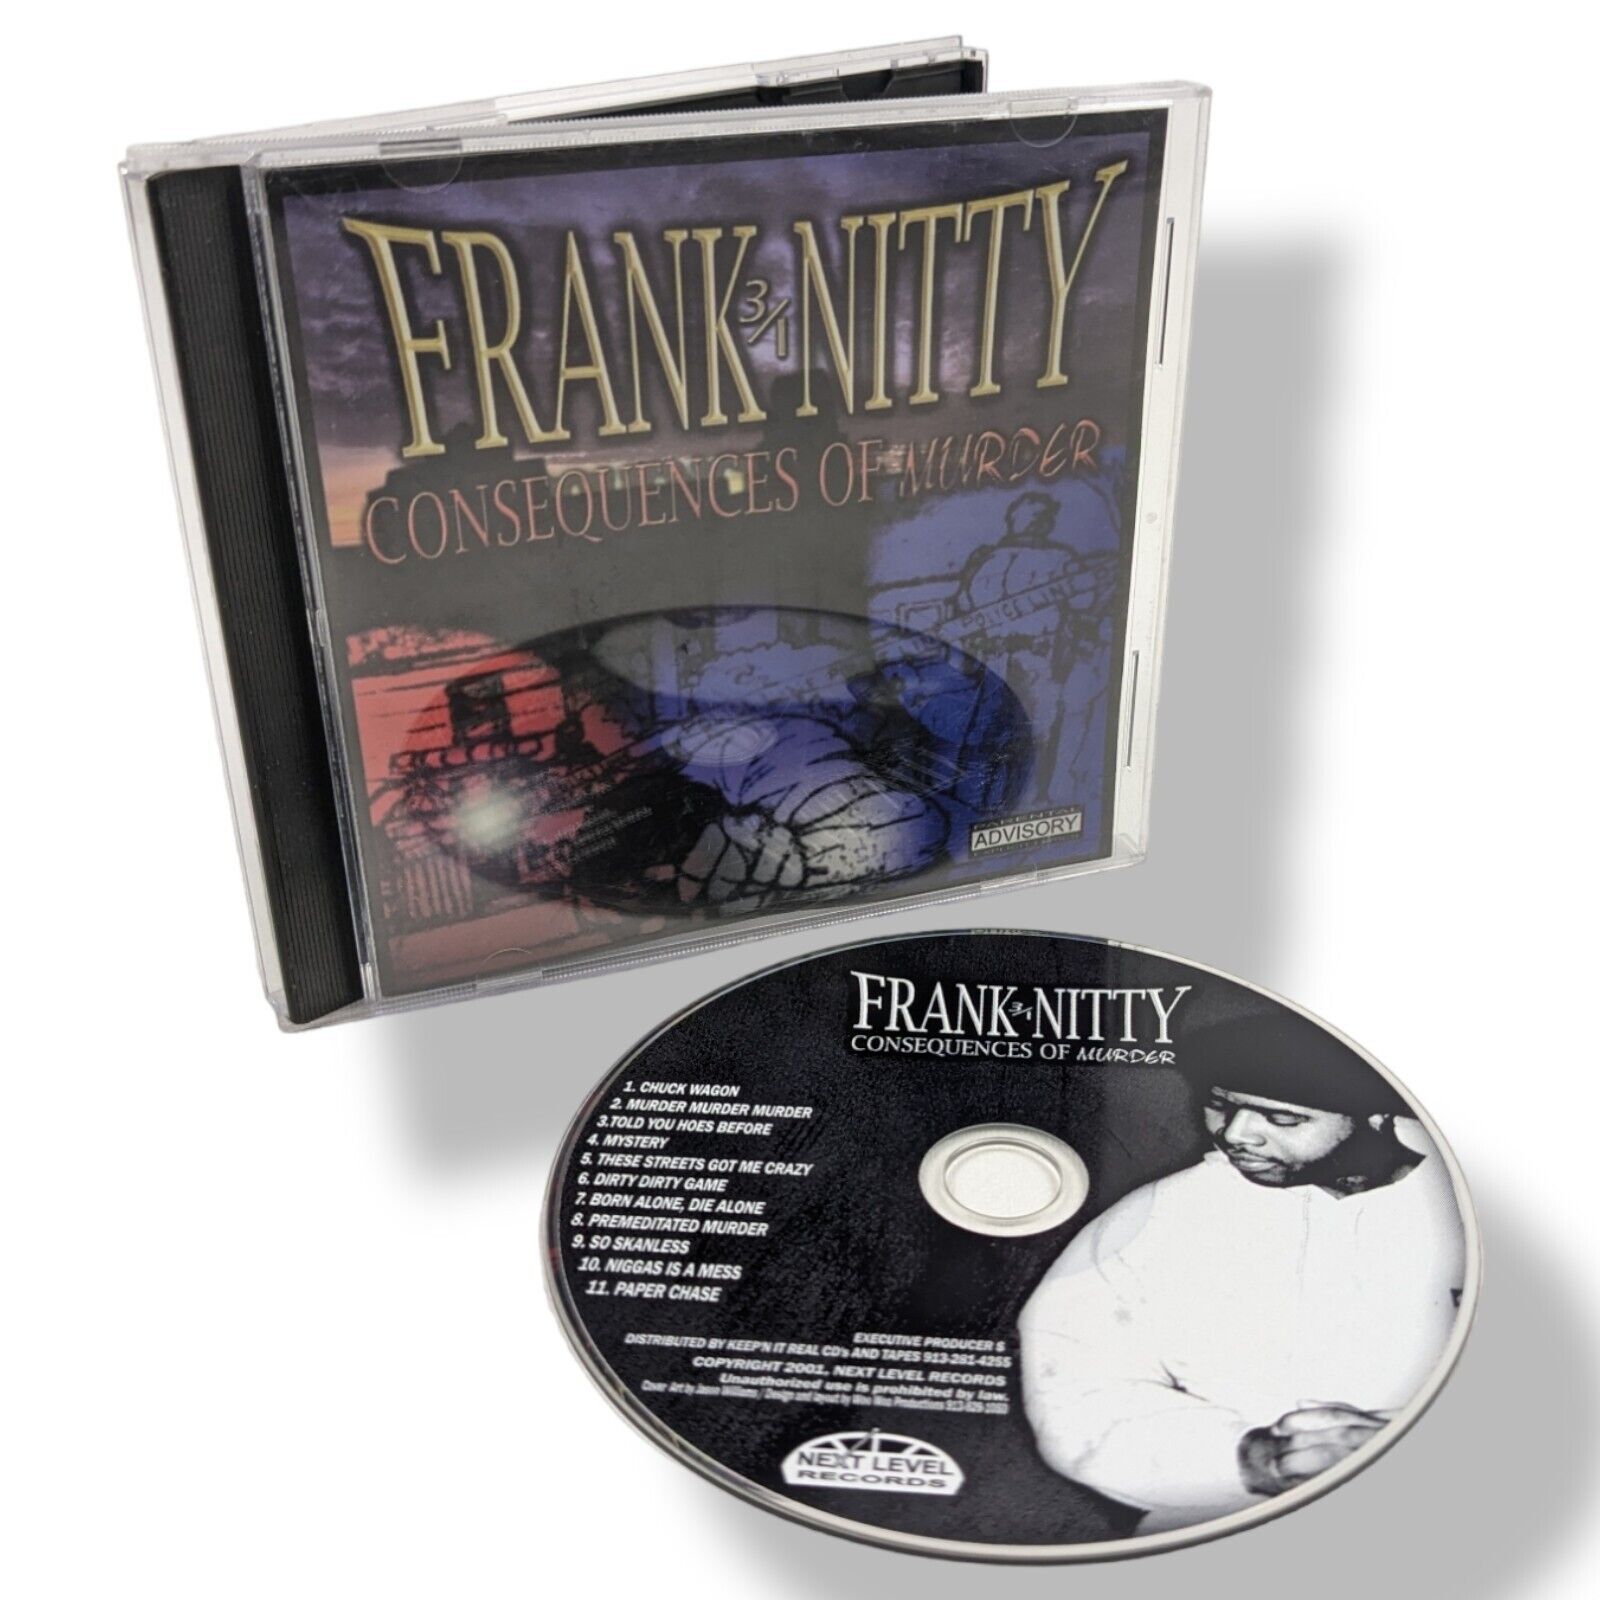 Frank Nitty - Consequences of Murder [CD, 2001] RARE HTF OOP KANSAS CITY Rap